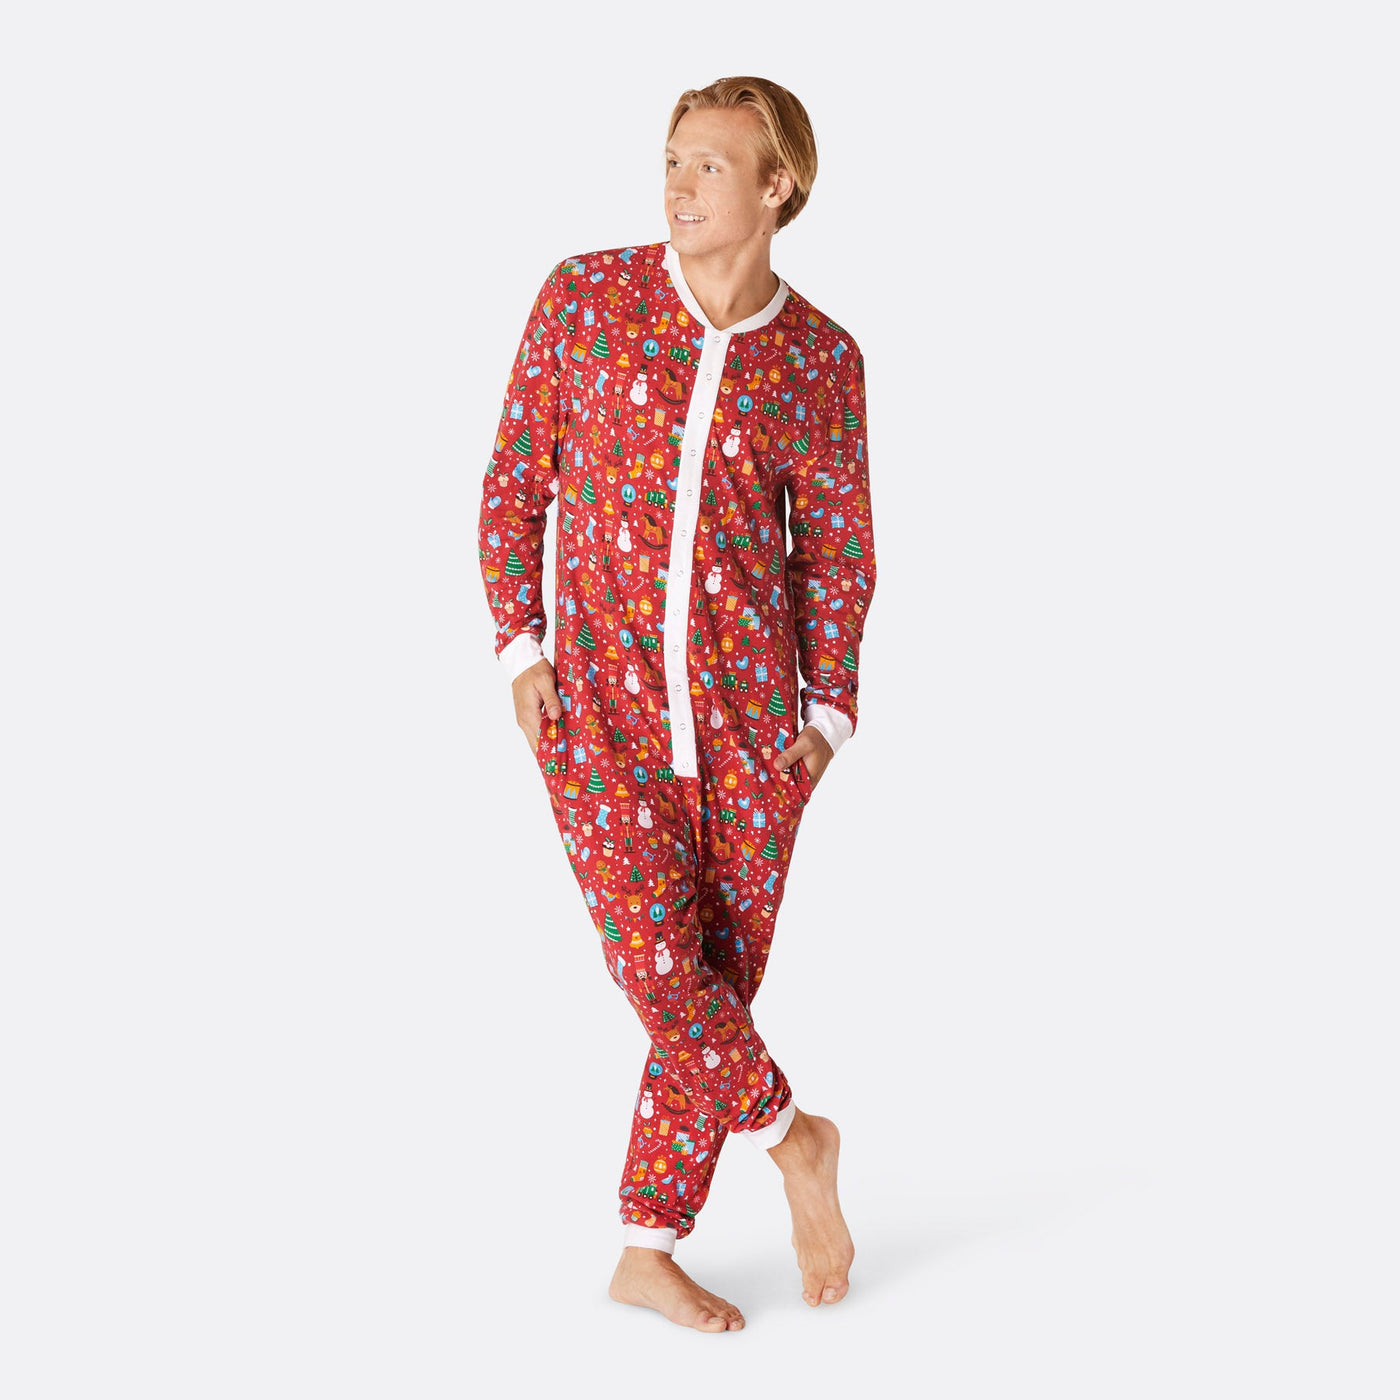 Men's Red Christmas Dream Overall Christmas Pyjamas